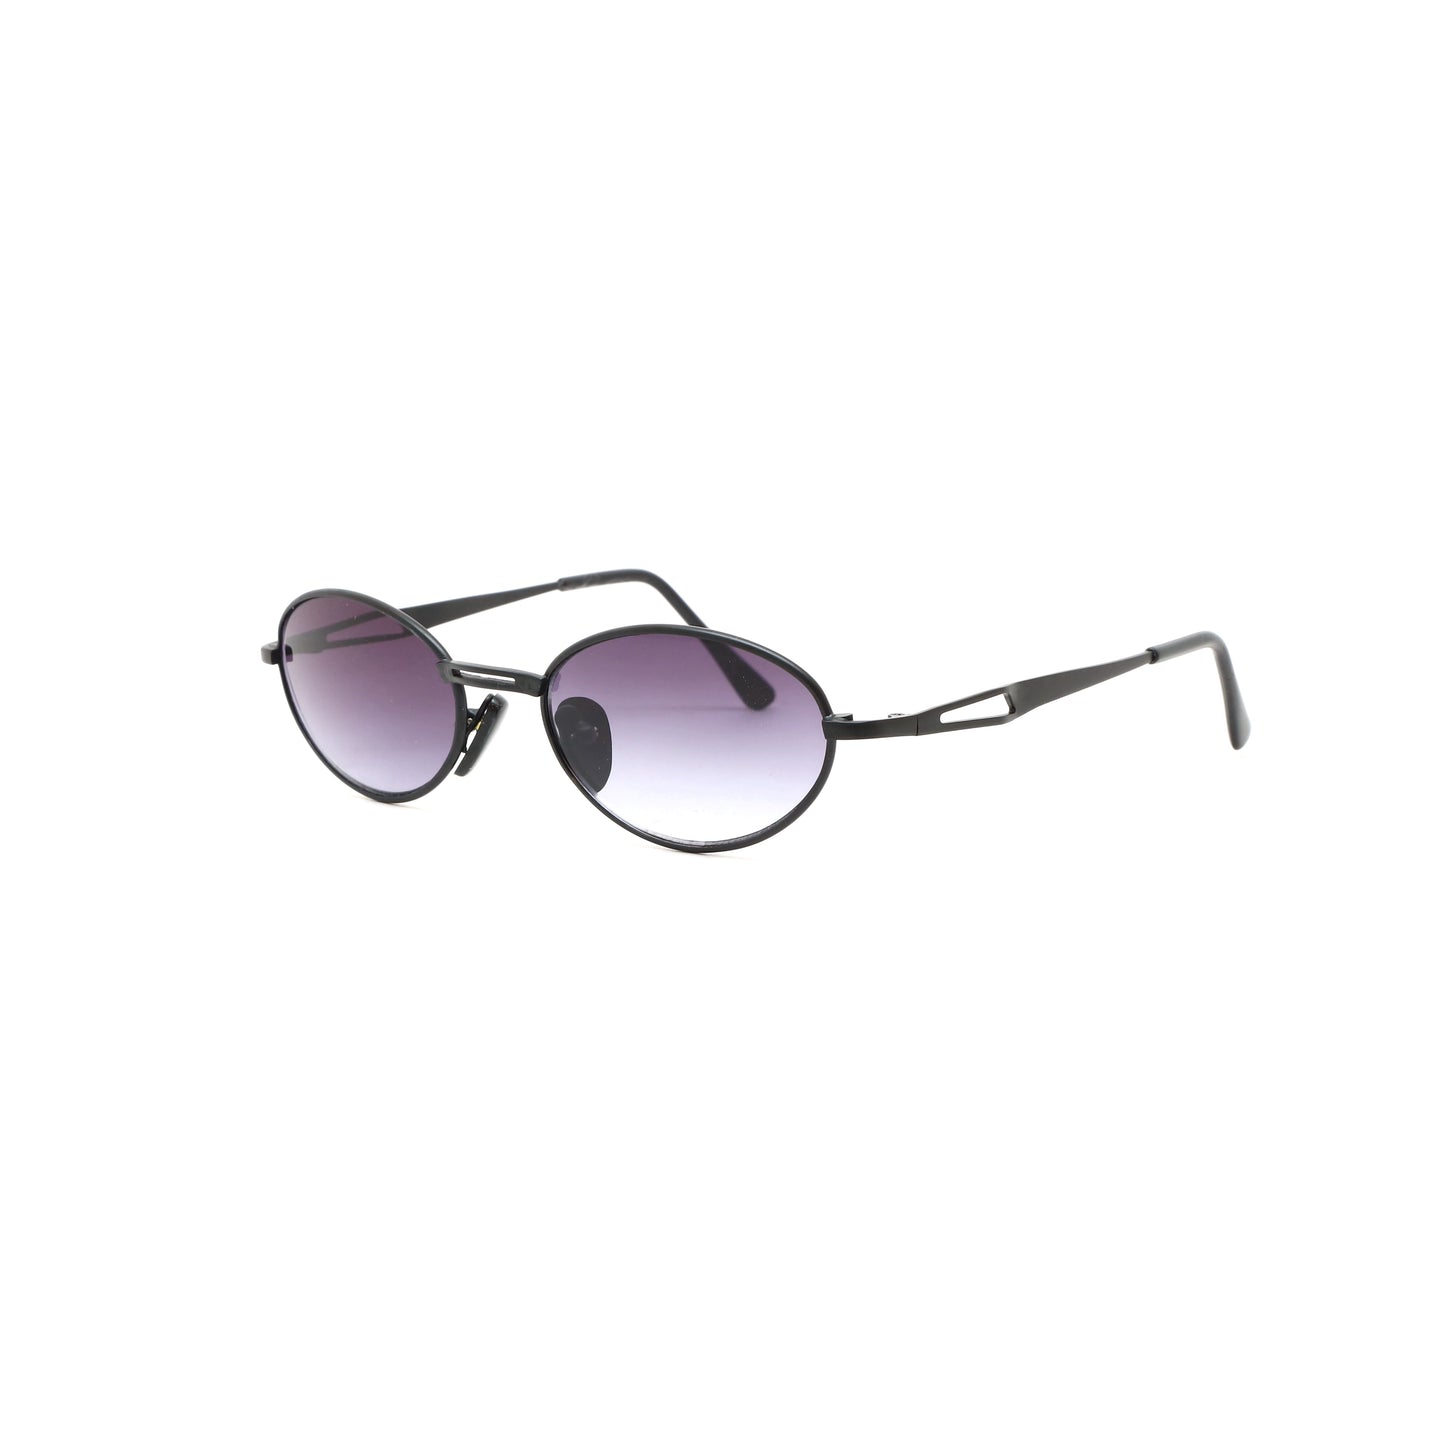 Deadstock 90s Wired Oval Sunglasses - Black/Purple